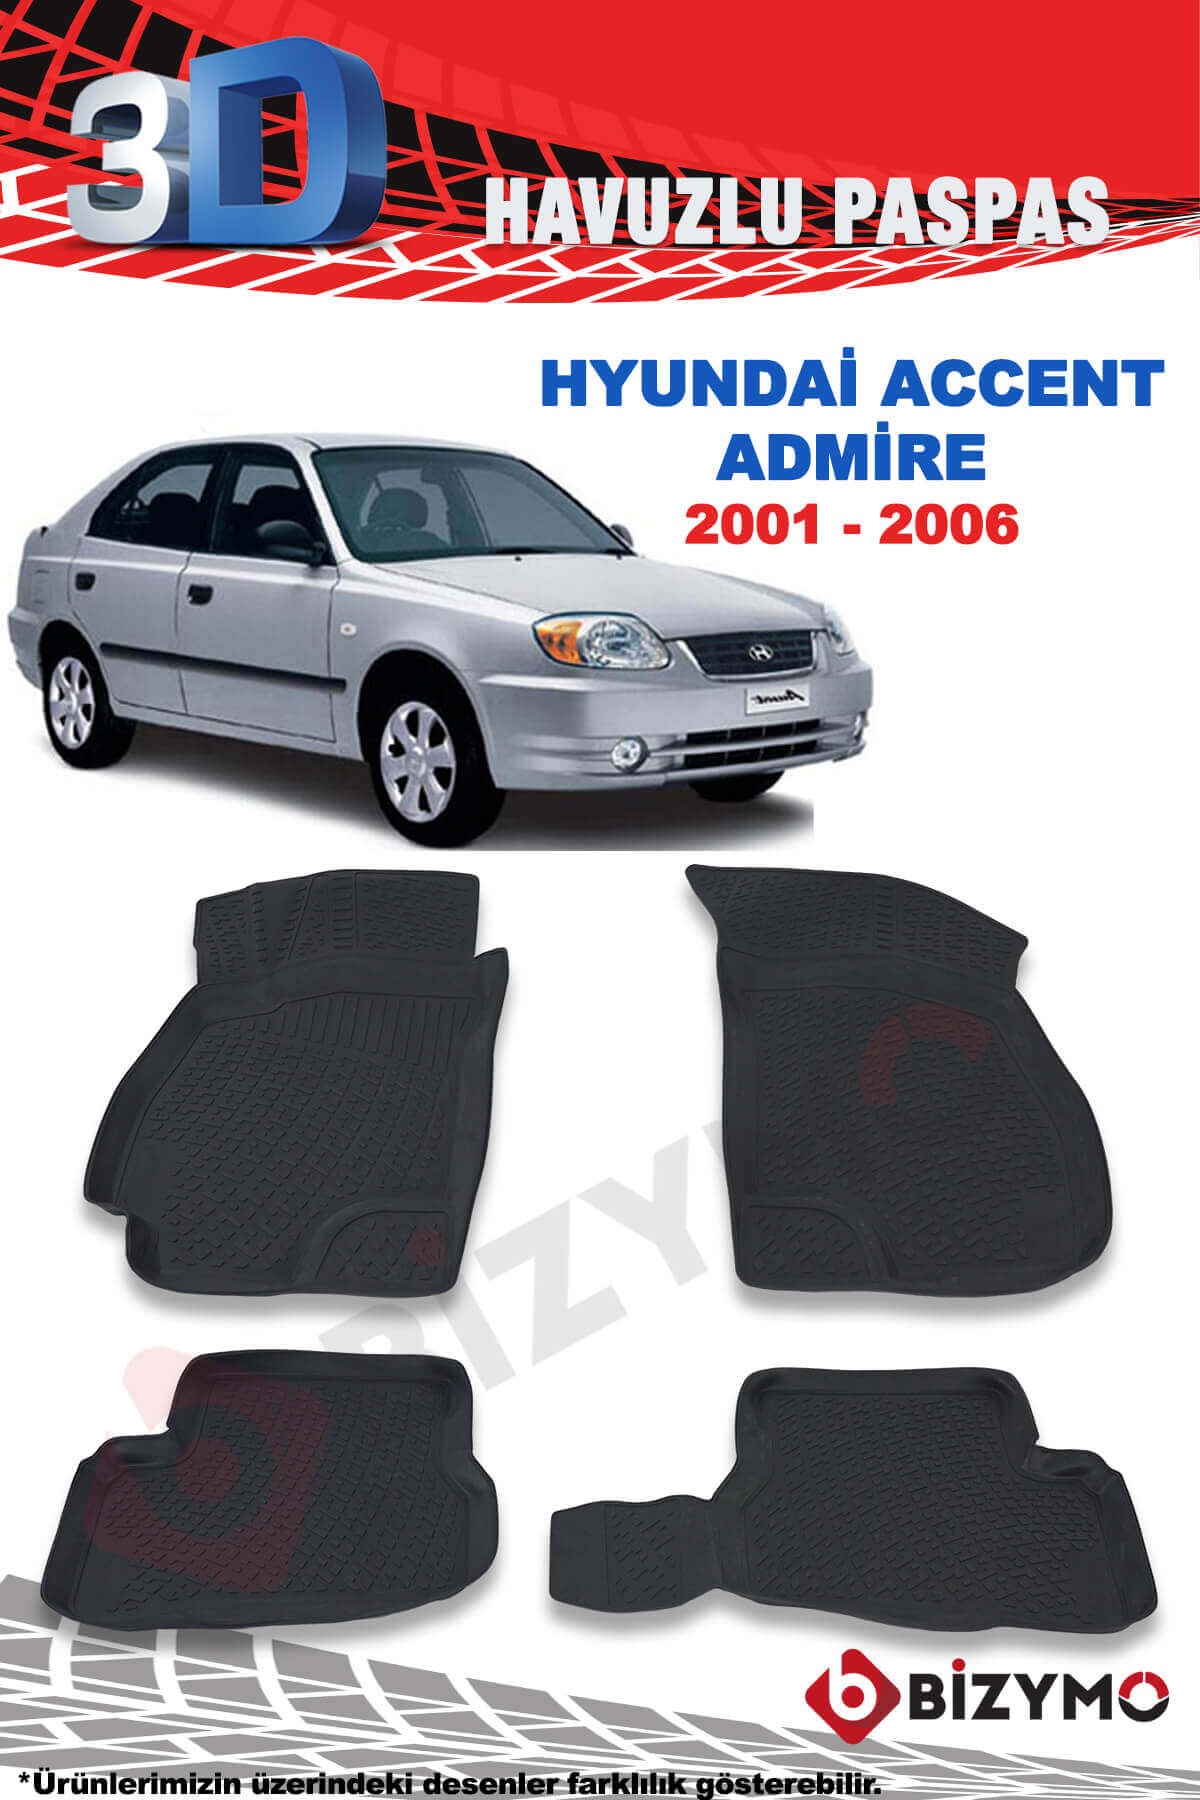 Hyundai Accent Admire 2001-2006 3D Paspas Takımı Bizymo - Bizim Oto